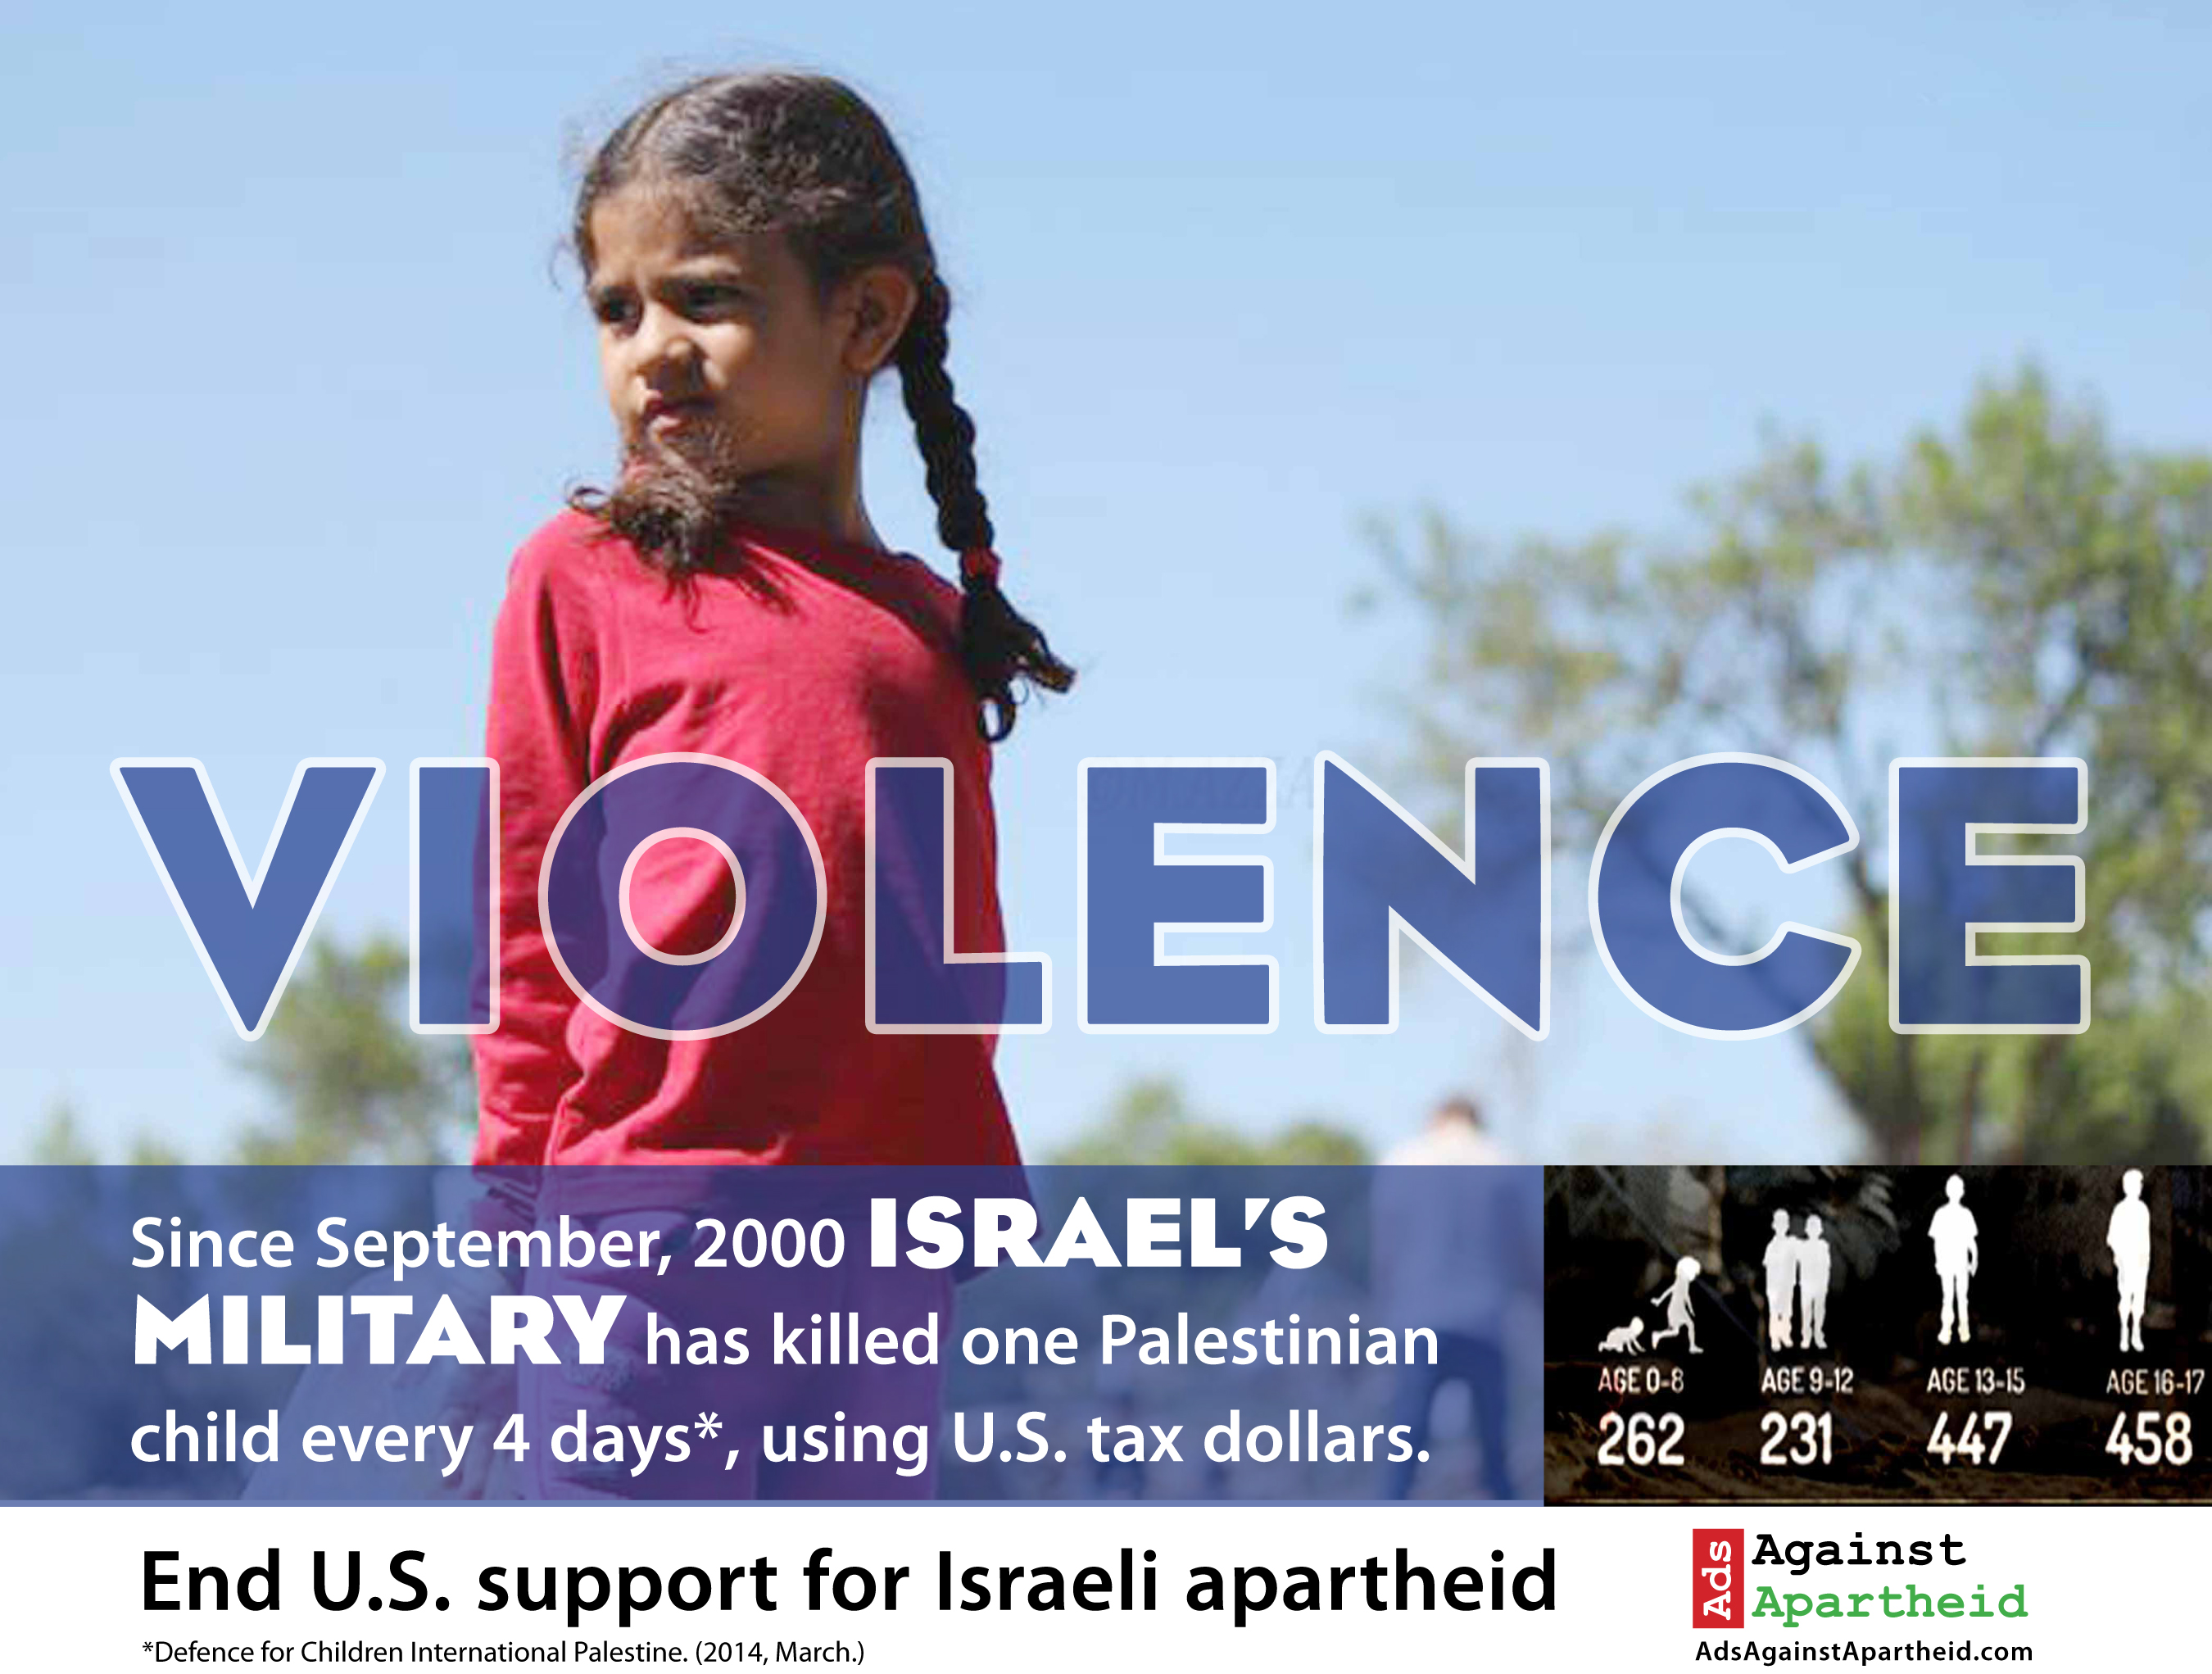 Photo: Ads Against Apartheid